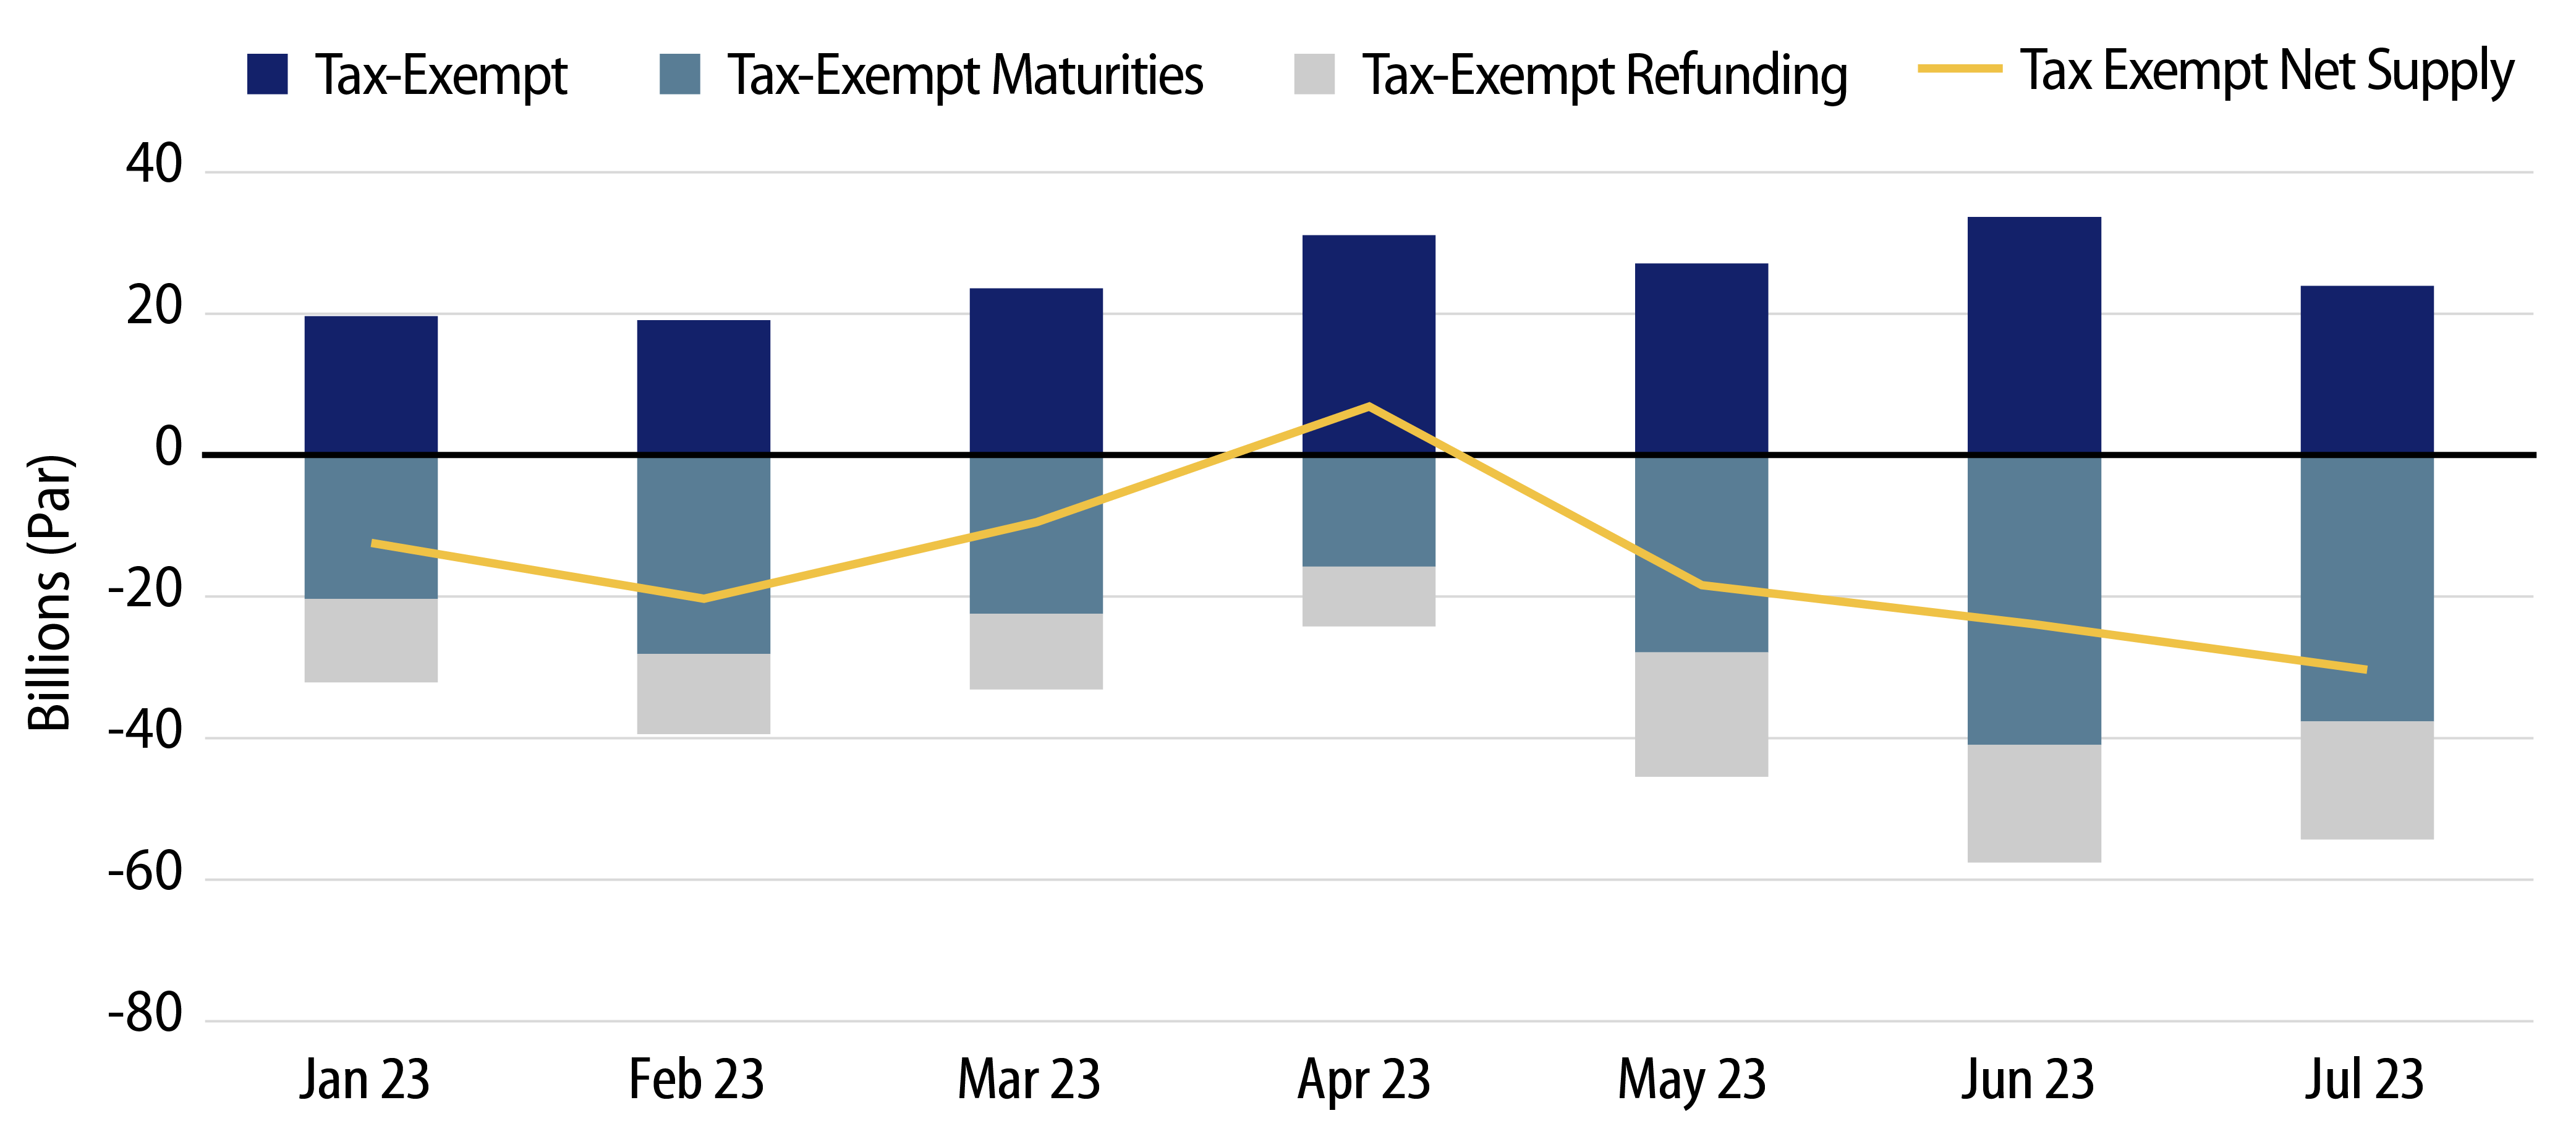 Explore 2023 Tax-Exempt Net Supply